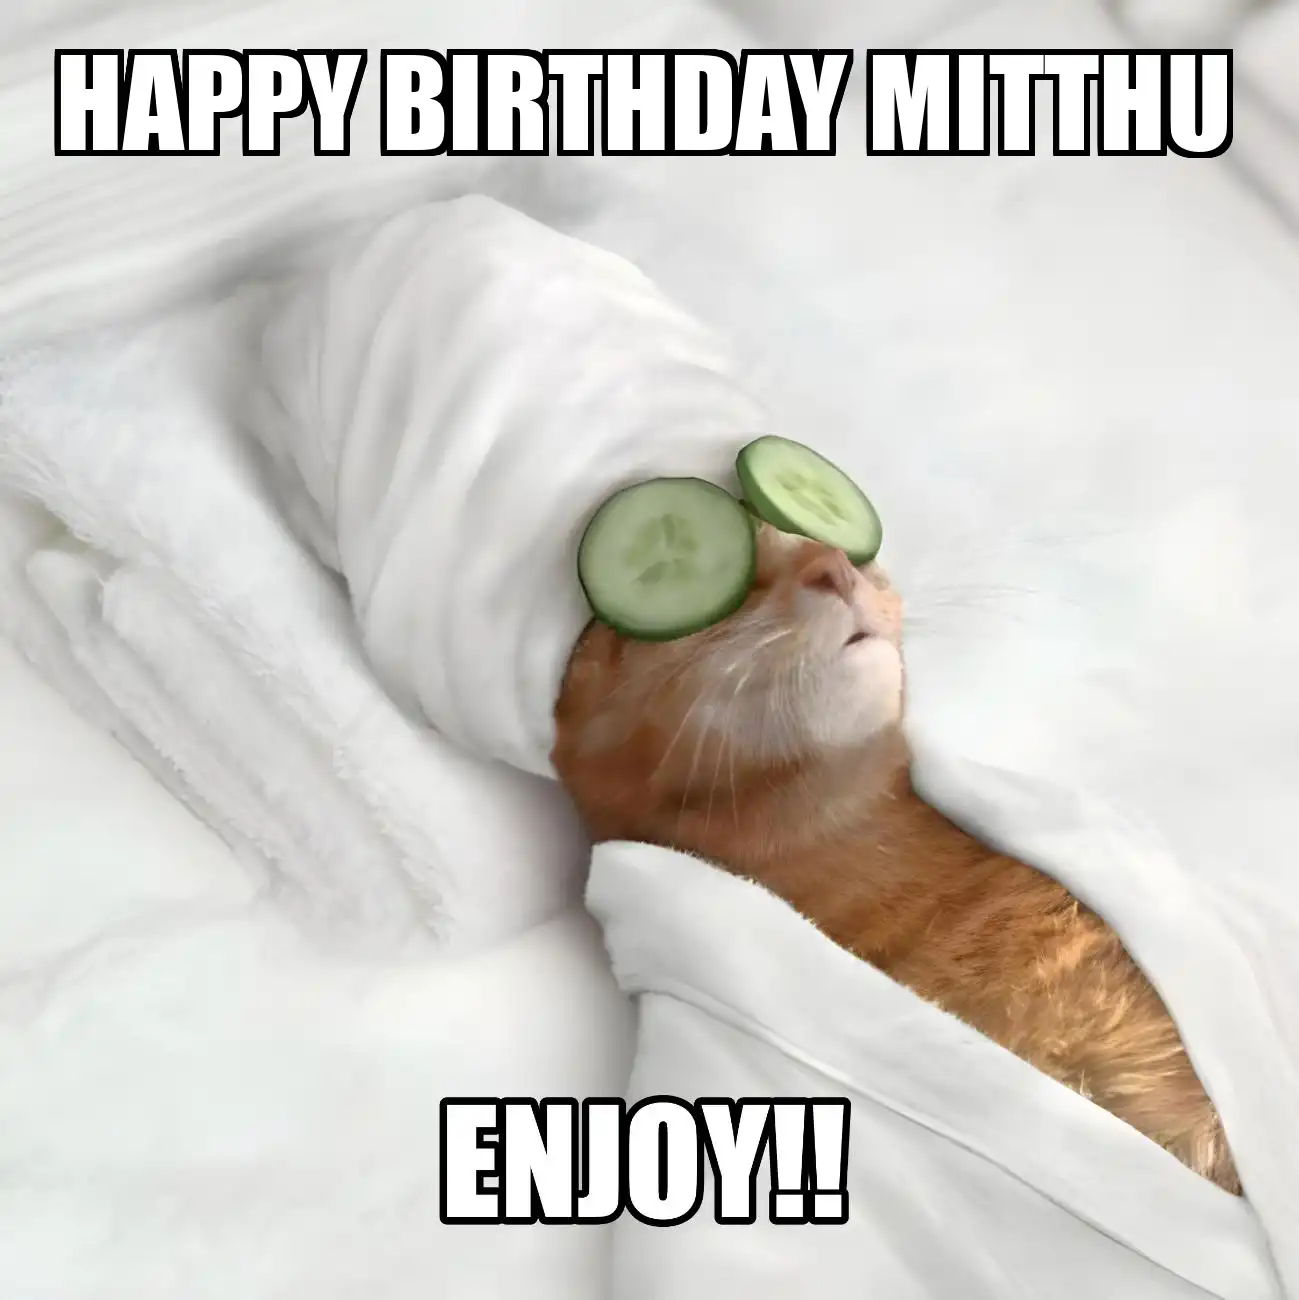 Happy Birthday Mitthu Enjoy Cat Meme